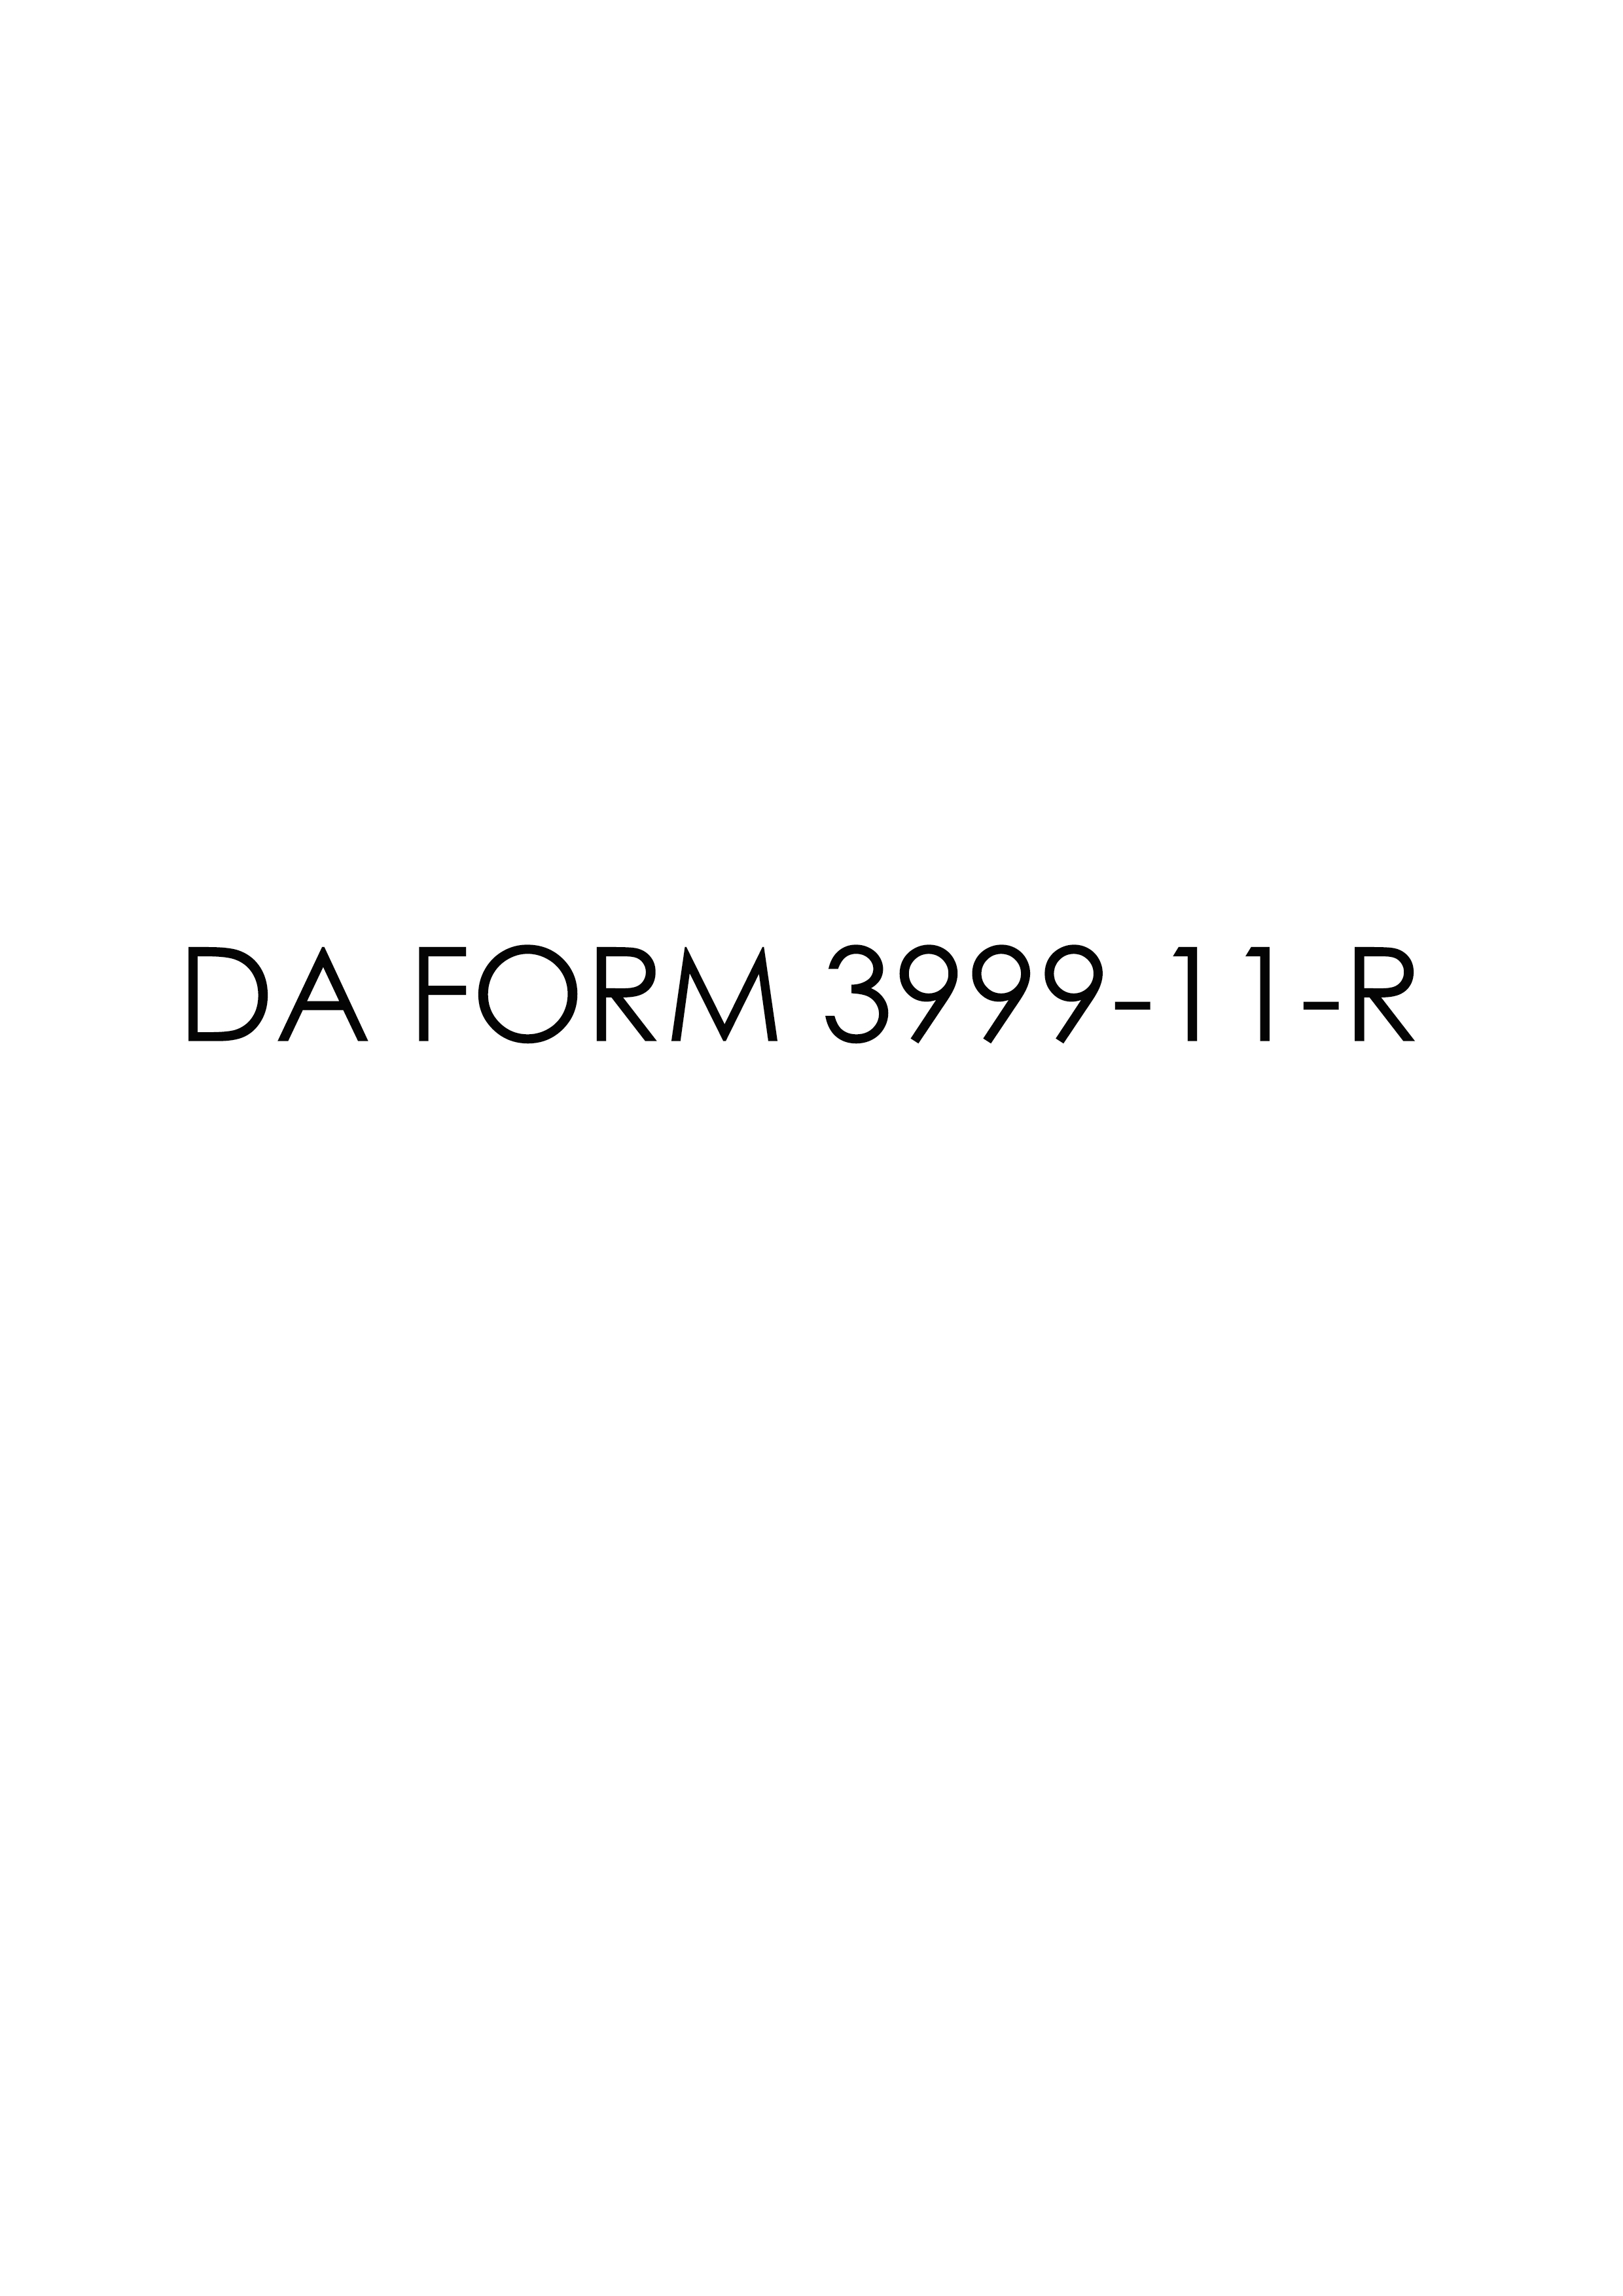 da Form 3999-11-R fillable